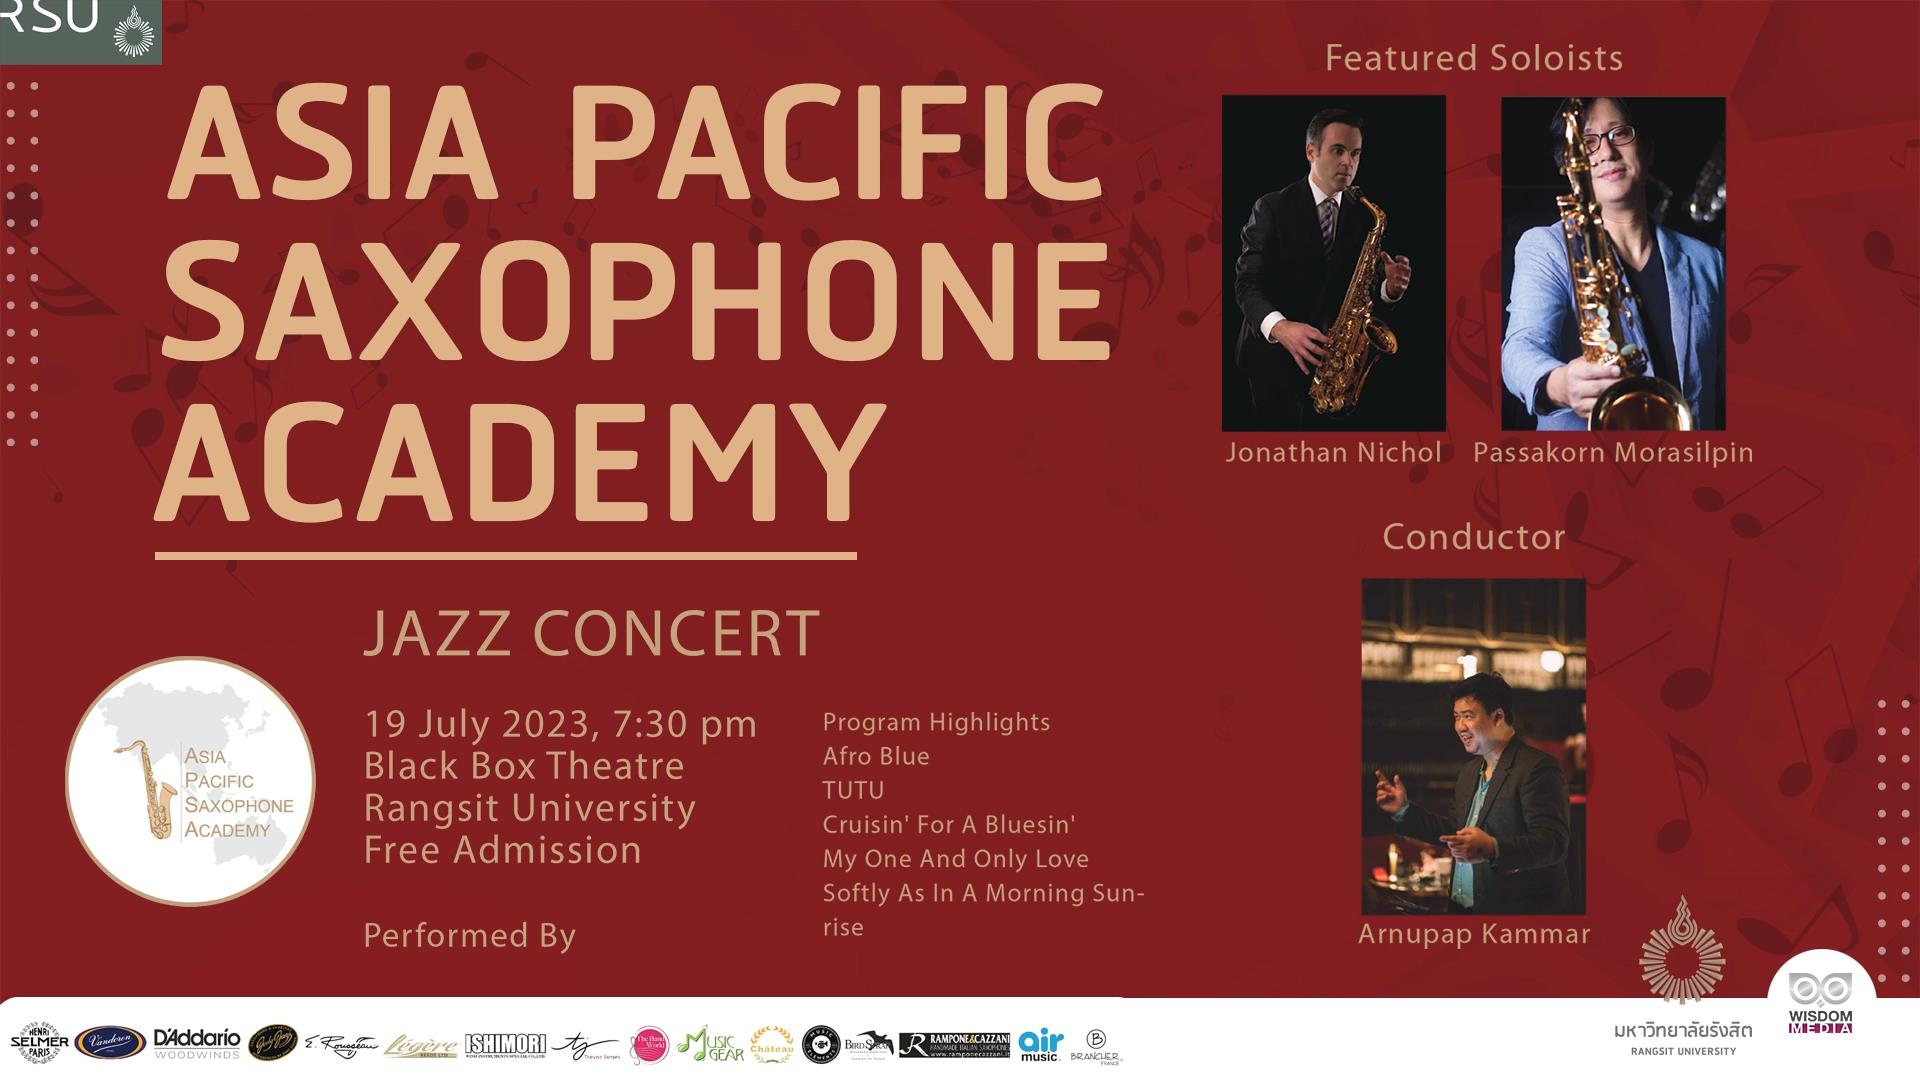 JAZZ CONCERT by Rangsit University Jazz Orchestra X Asia Pacific Saxophone Academy